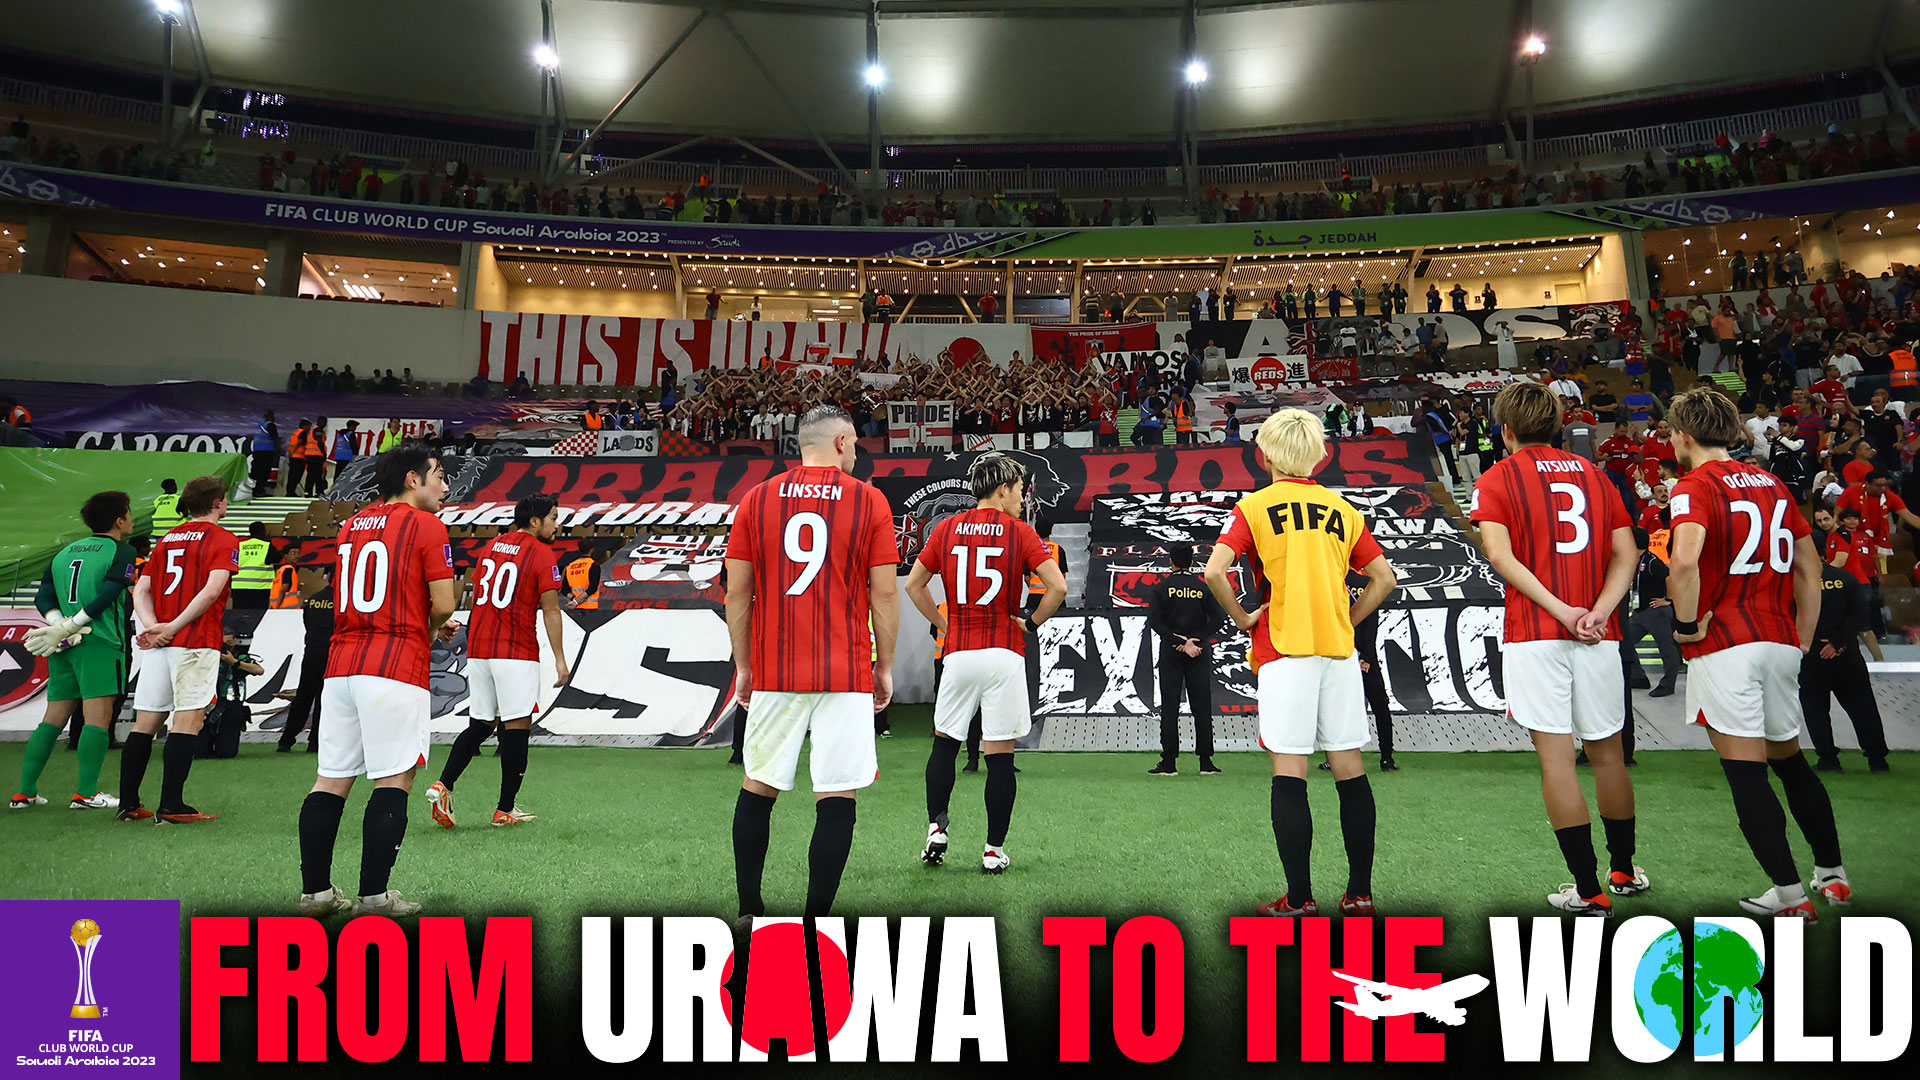 FIFAクラブワールドカップ2023 | URAWA RED DIAMONDS OFFICIAL WEBSITE